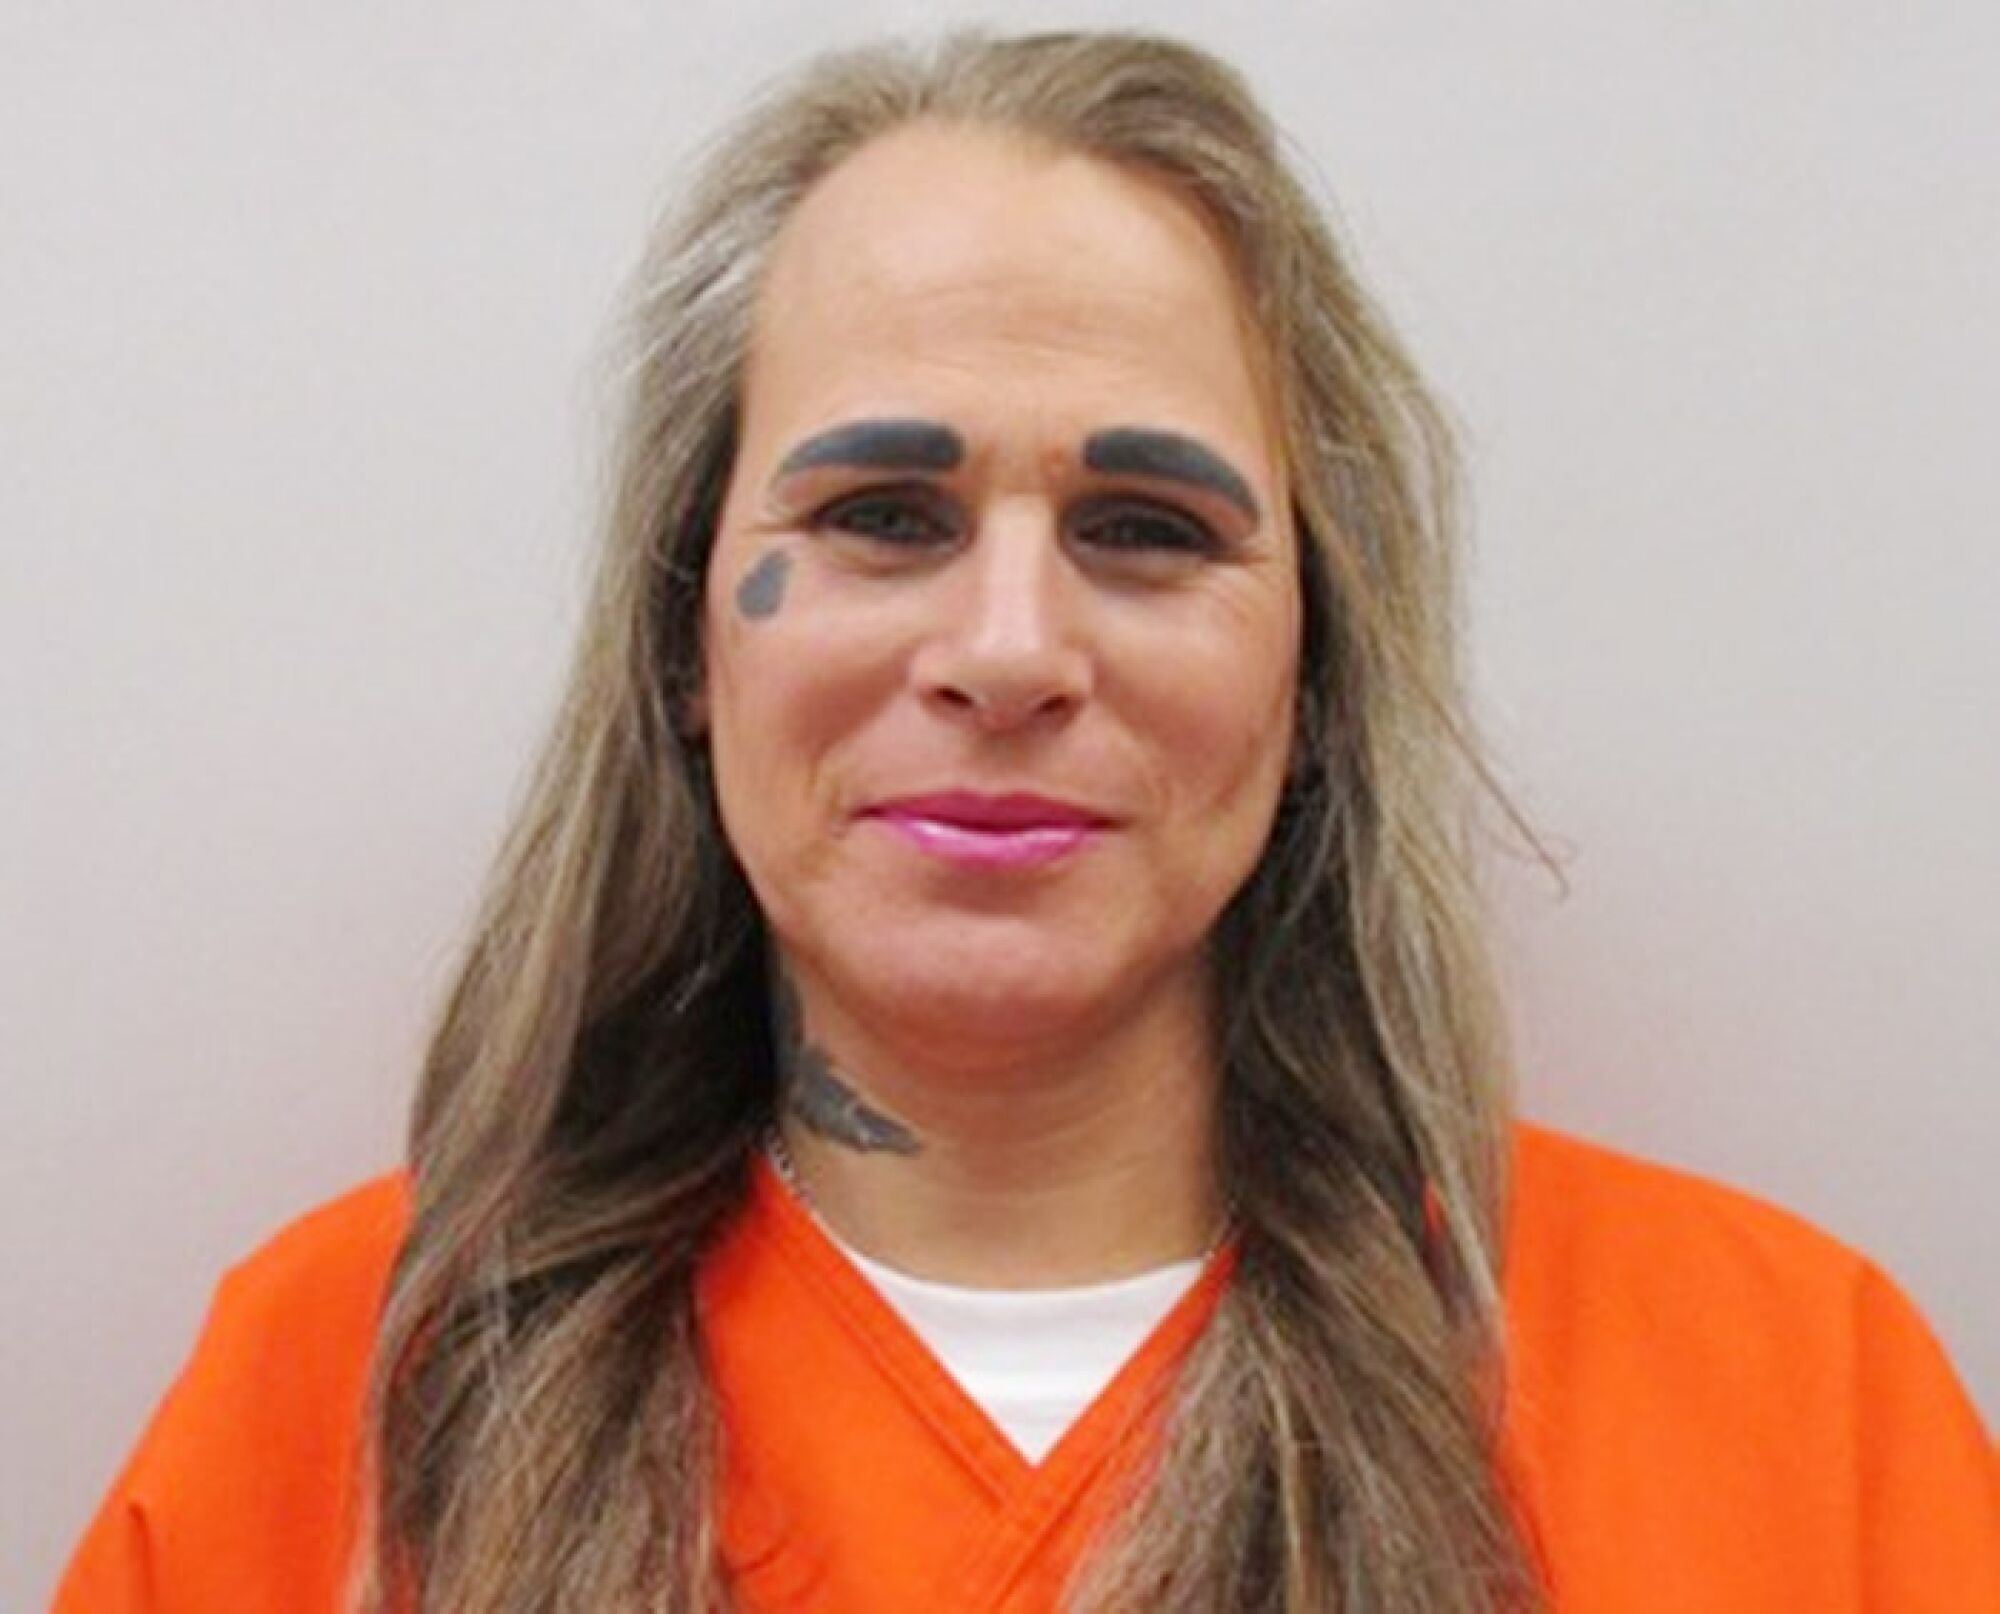 Daralyn Madden, in an orange shirt and wearing long hair, identifies as a transgender woman.